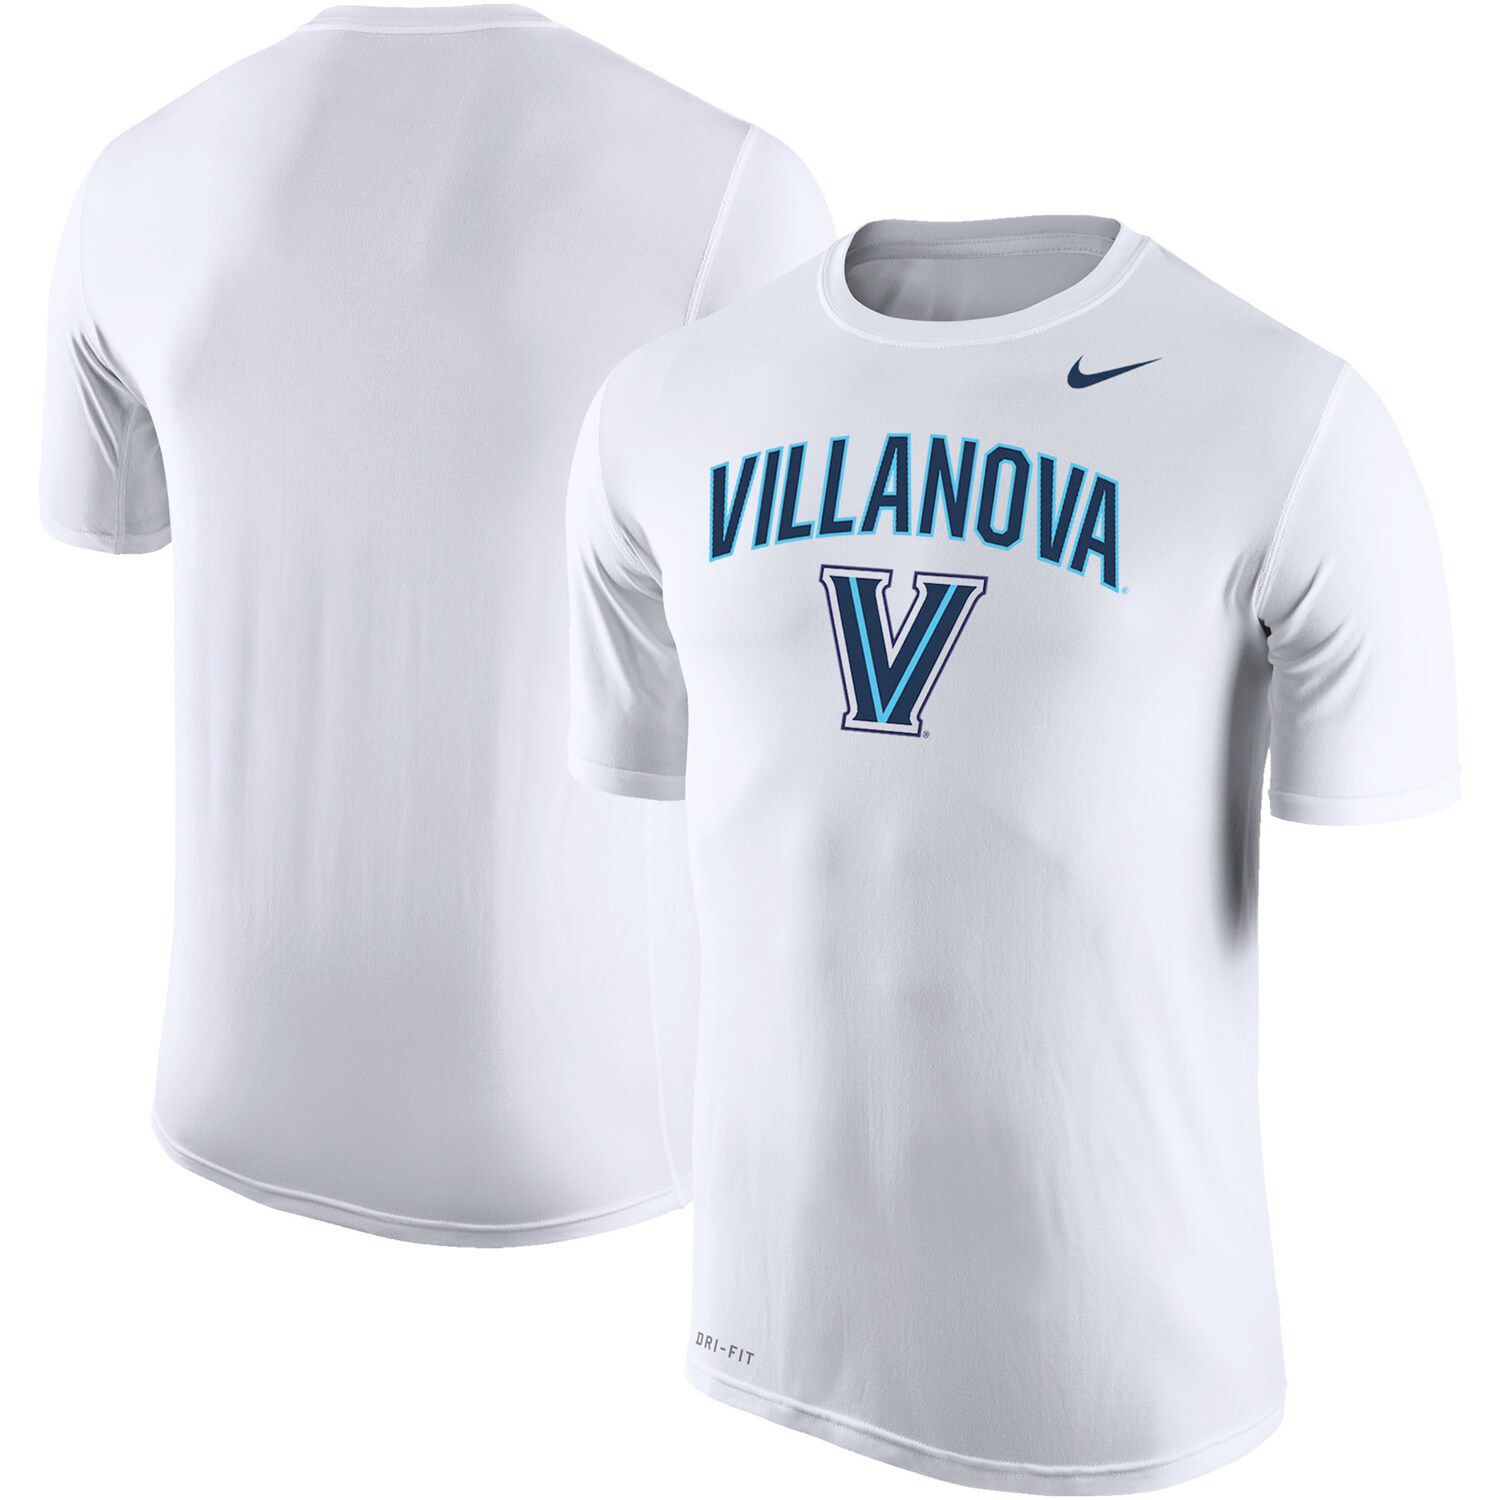 villanova wildcats jersey